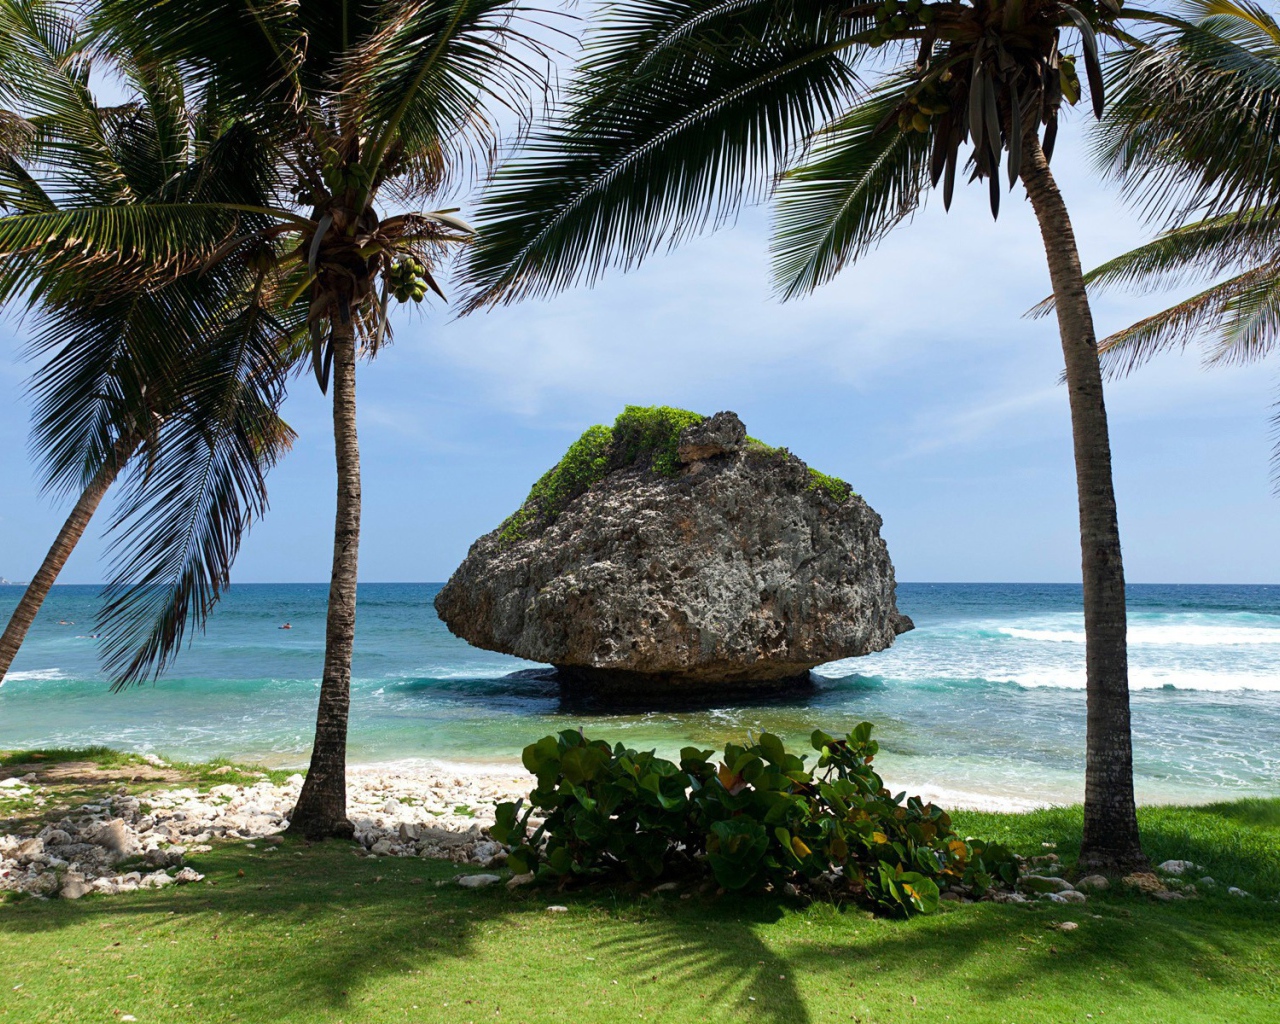 Пальмы на фоне большого камня у берега